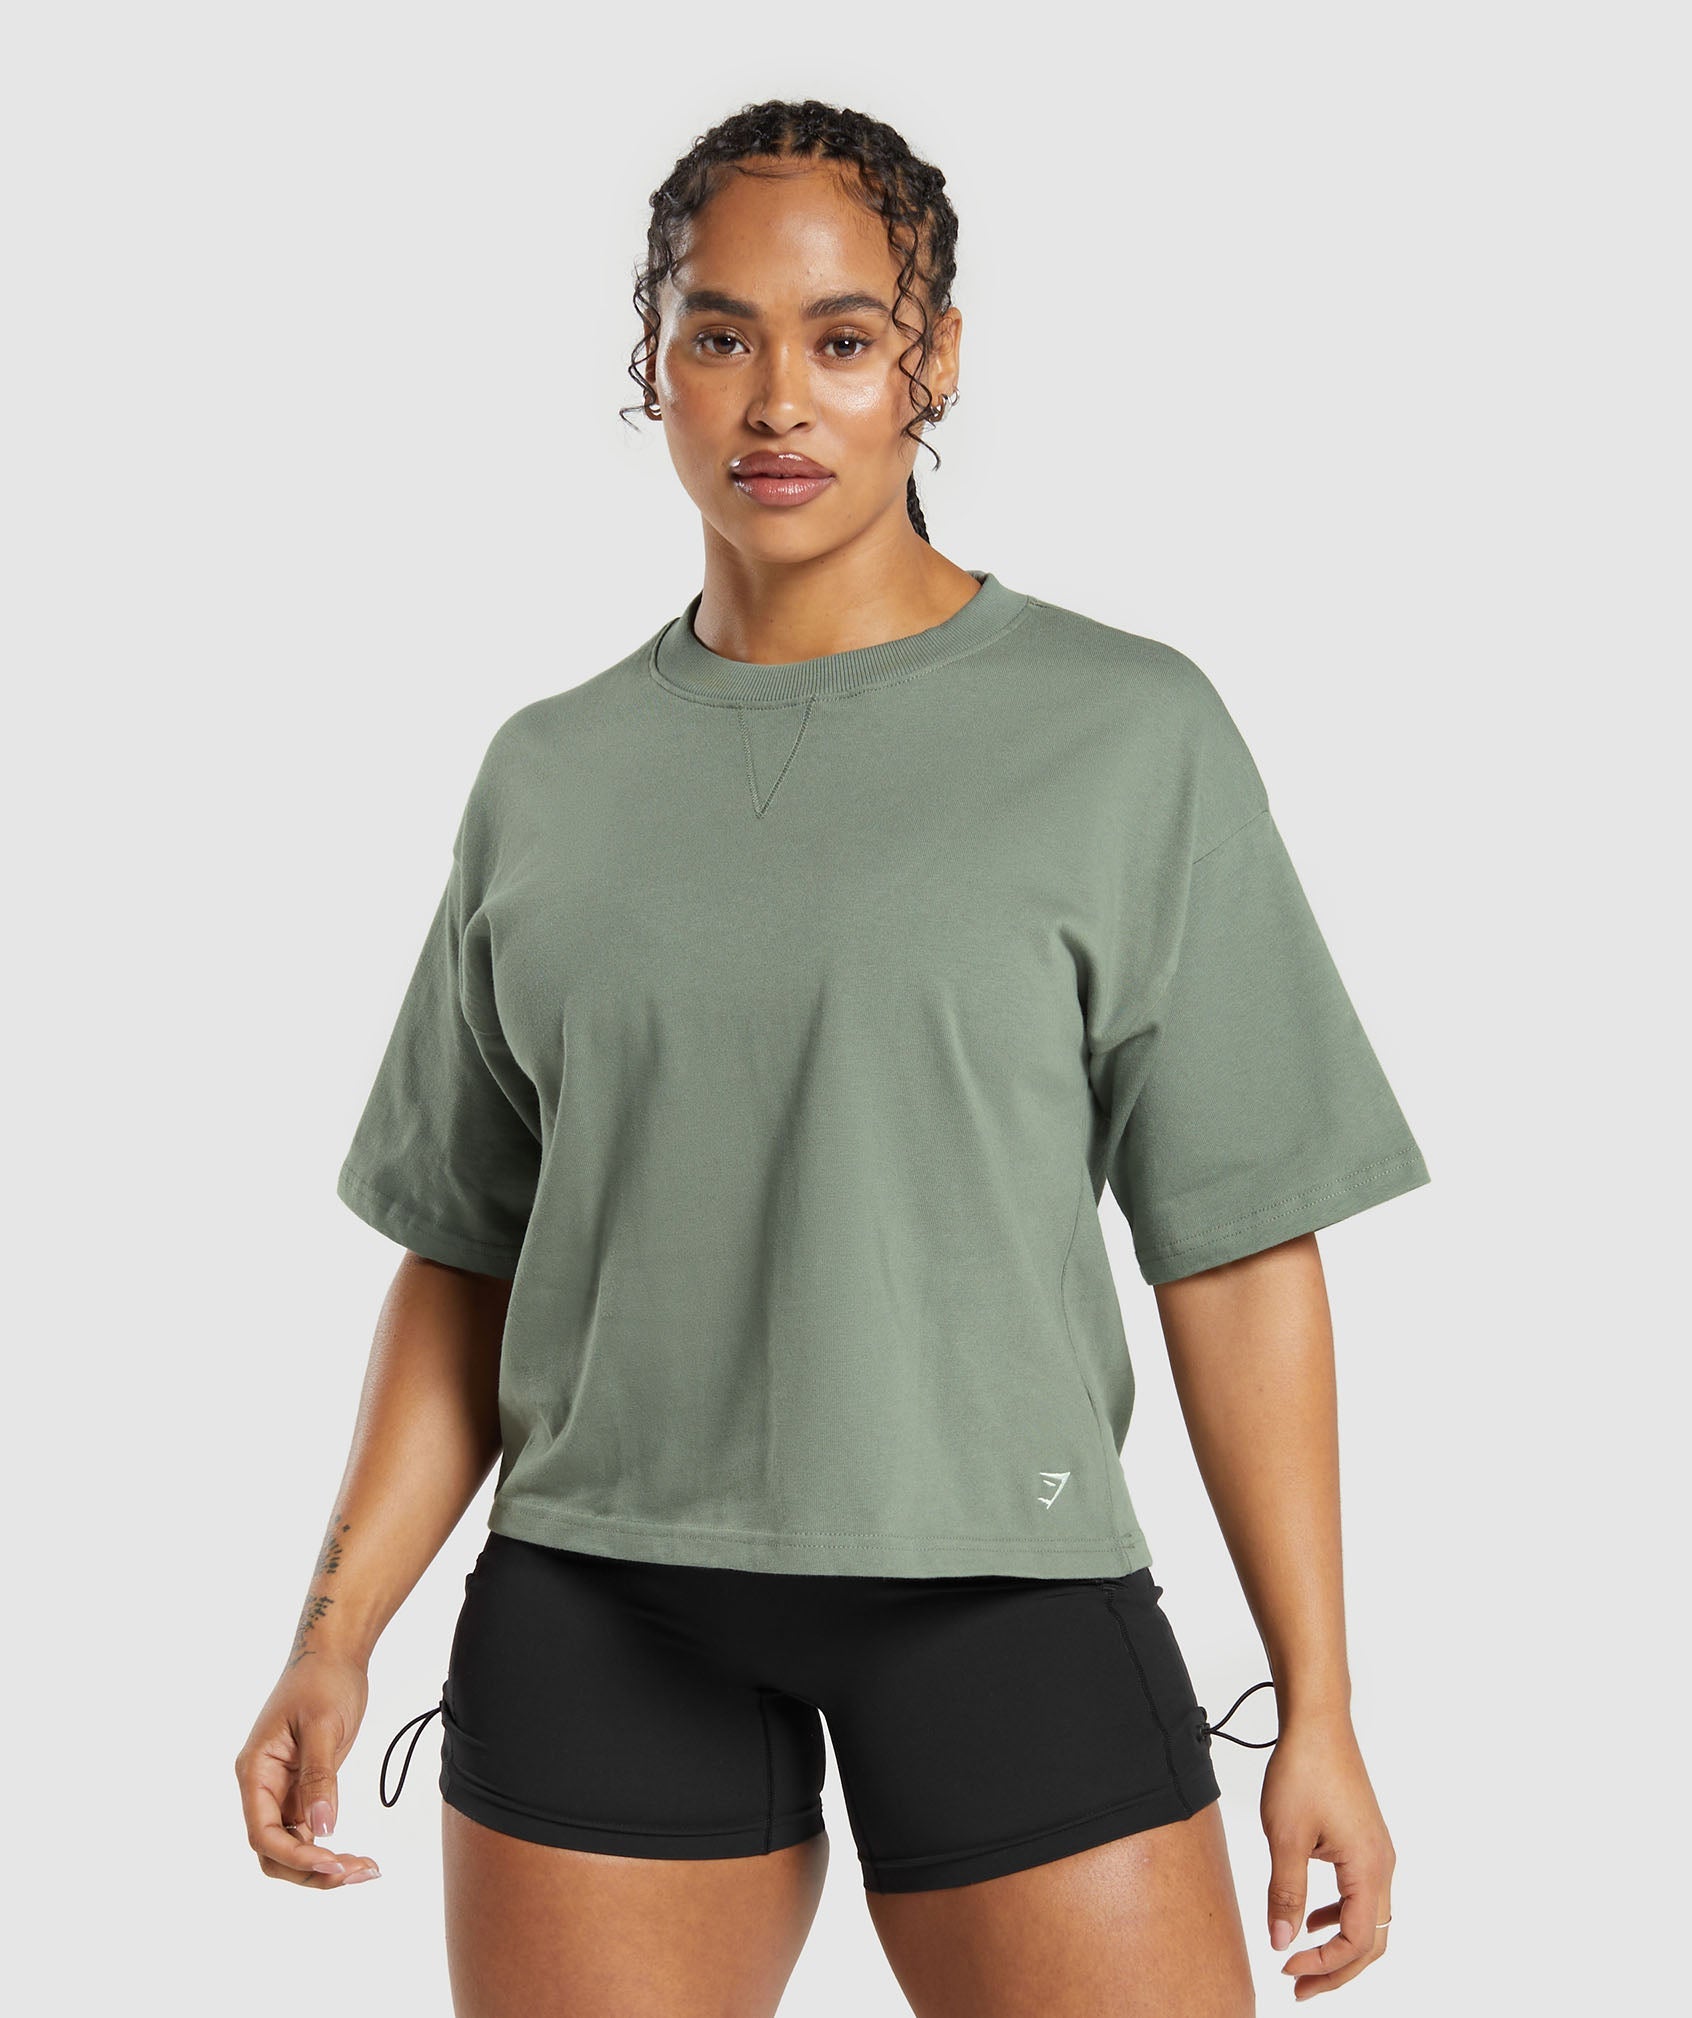 Women's Gym T-Shirts, T-Shirts & Tops